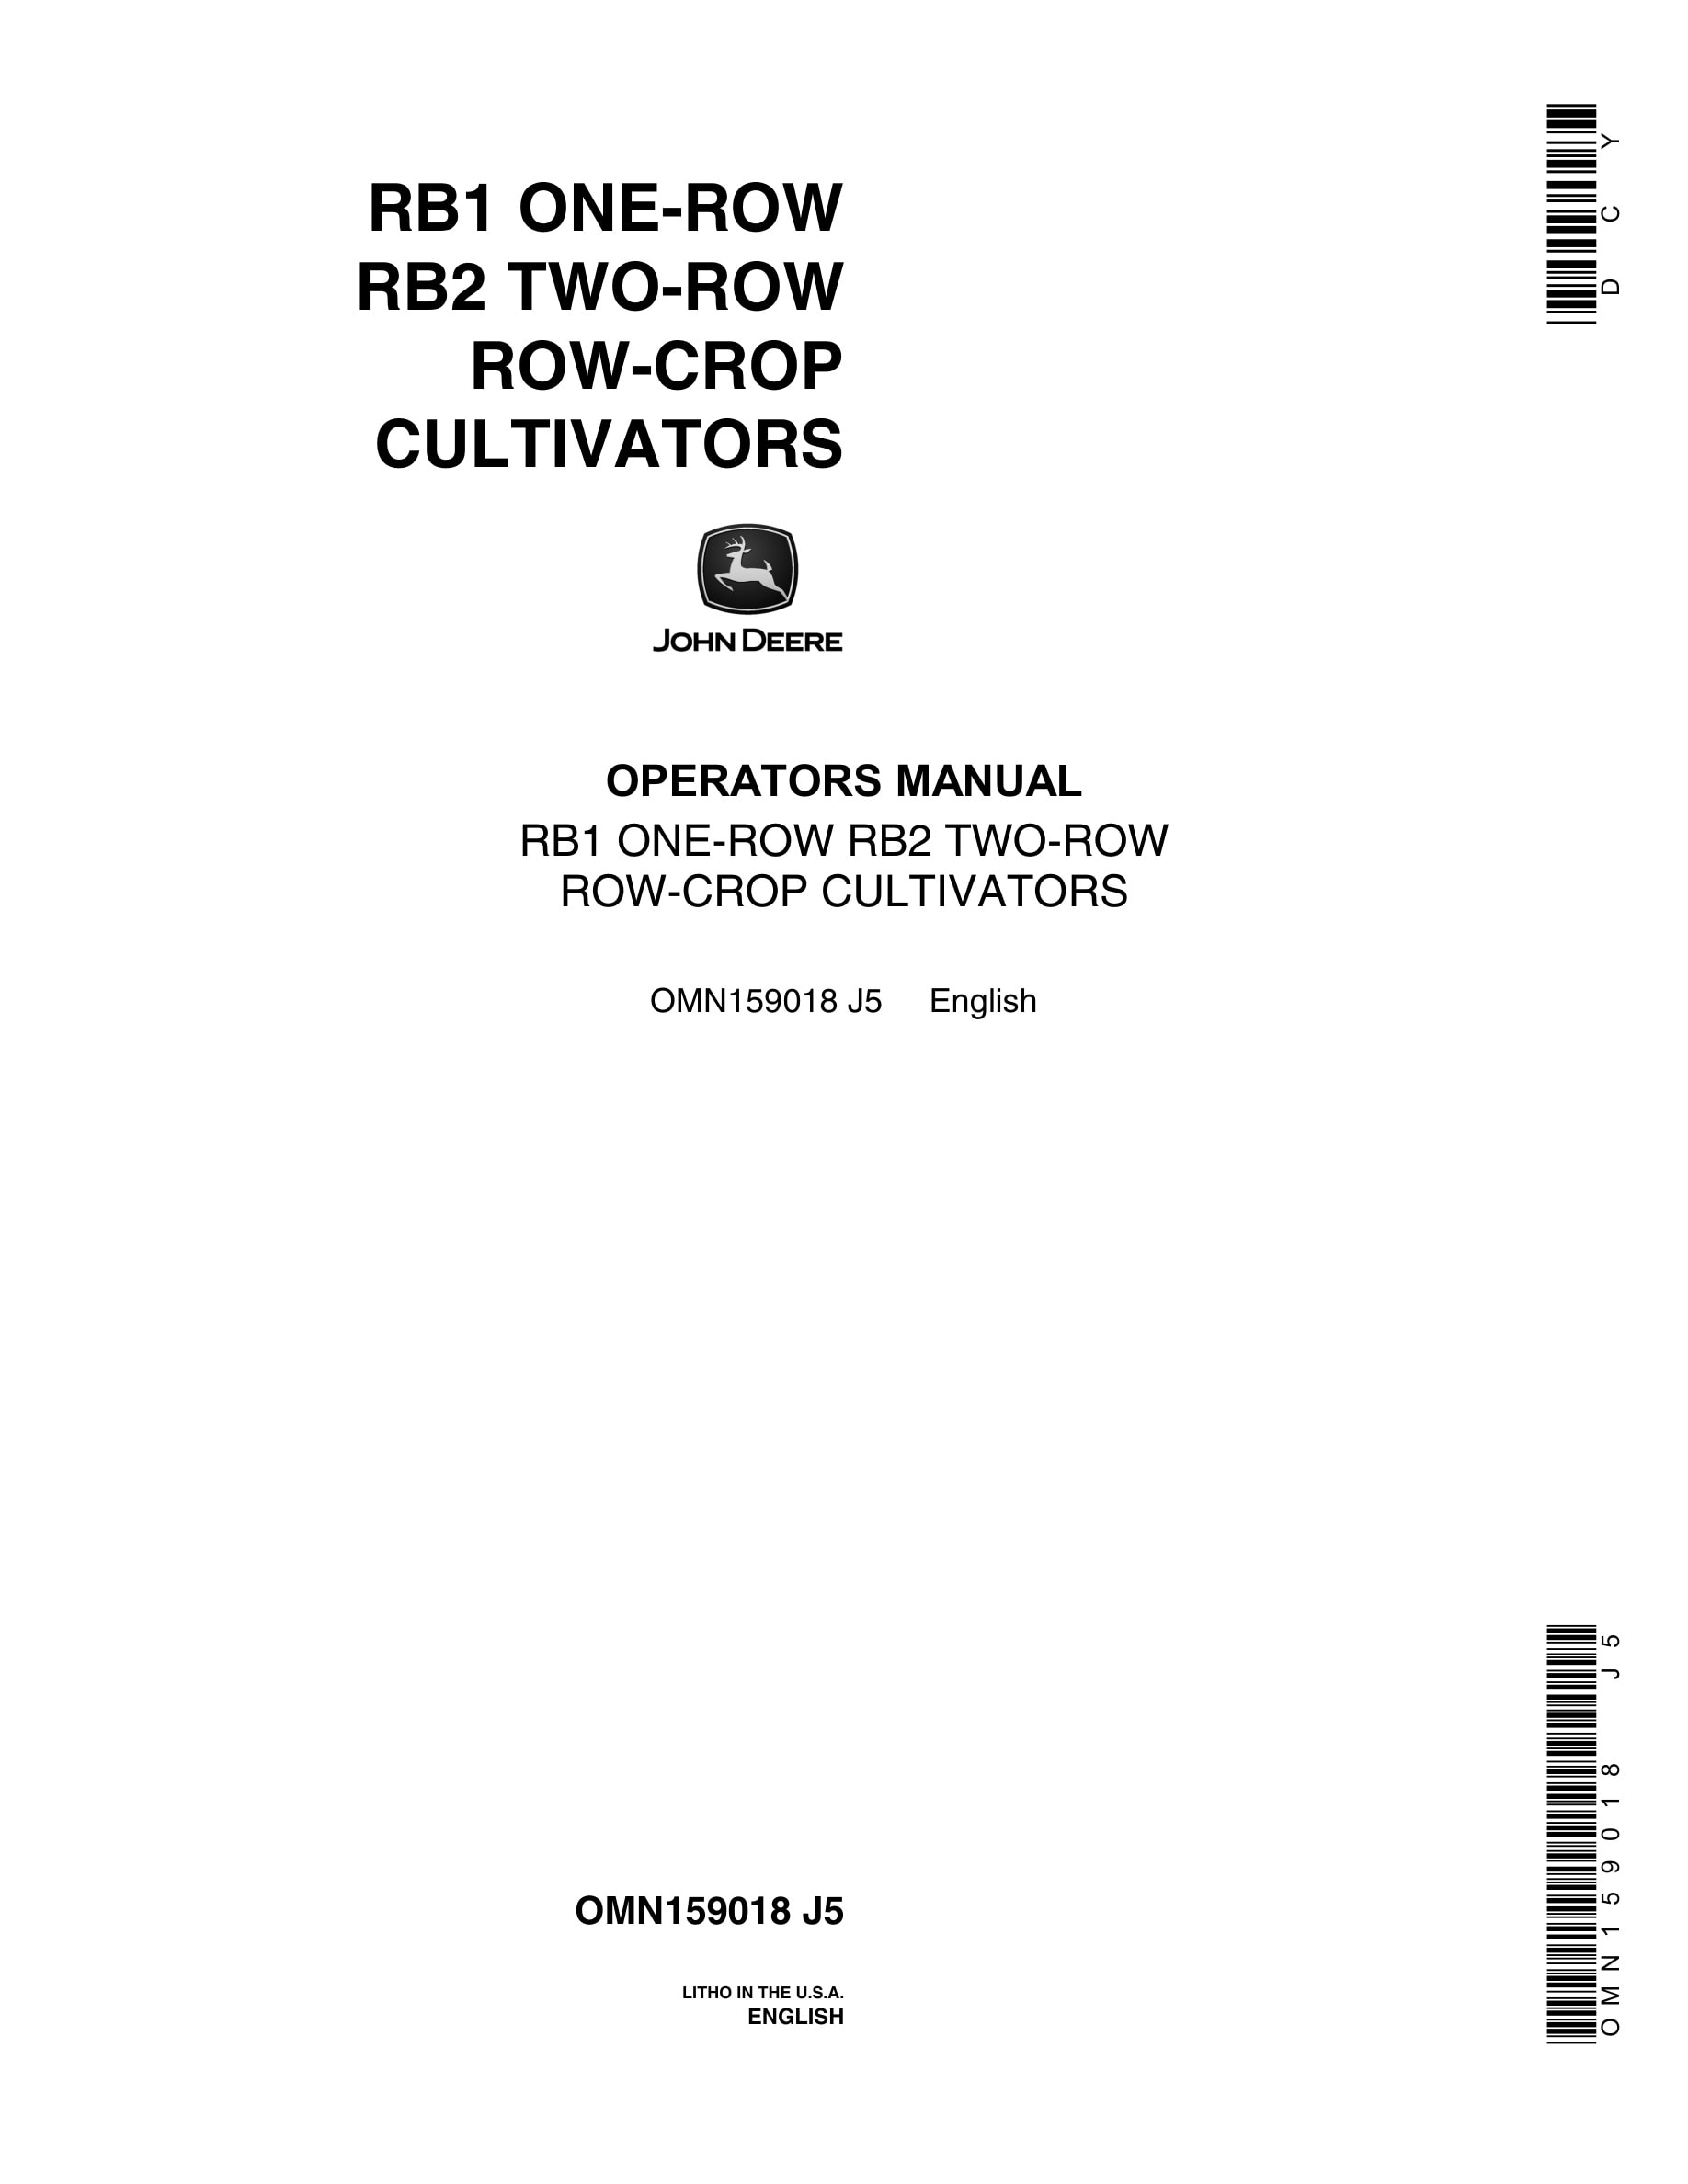 John Deere RB1 ONE-ROW RB2 TWO-ROW ROW-CROP CULTIVATOR Operator Manual OMN159018-1